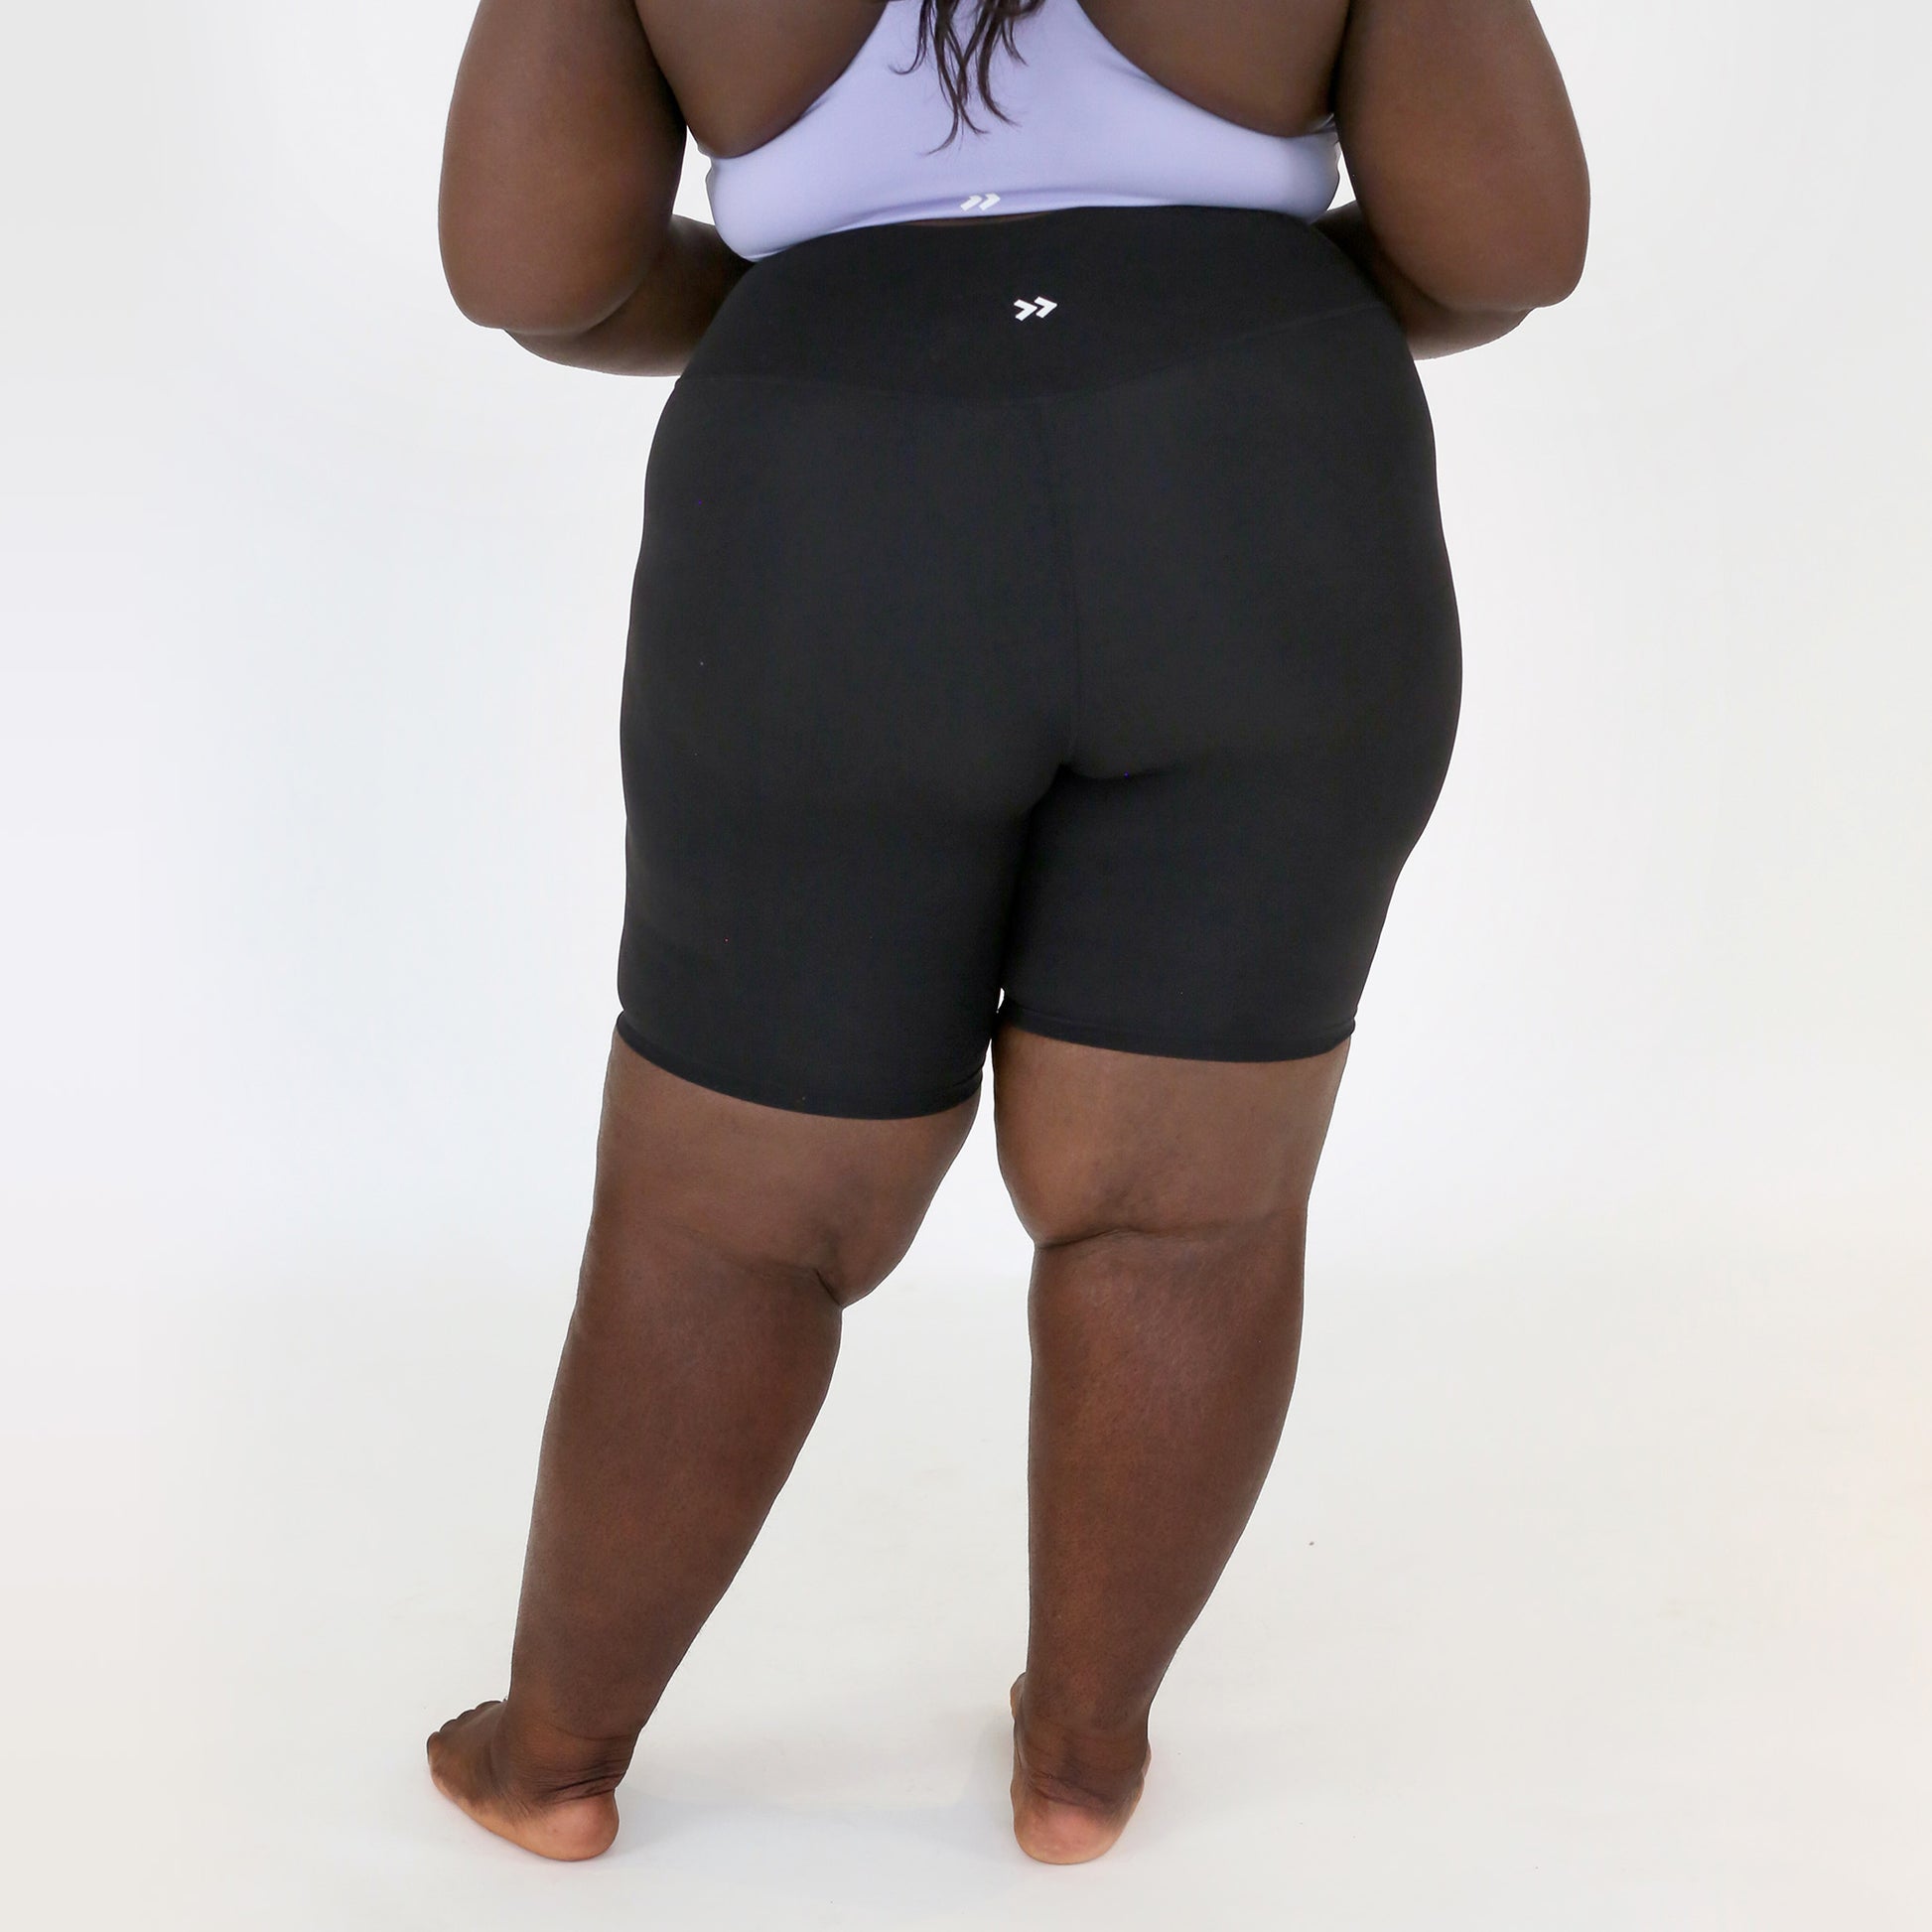 Plus Size High Waisted Shorts Jack Knickers Women Girls Cycling Shorts  Black Jeggings Skin Set Womens French Knickers : : Fashion